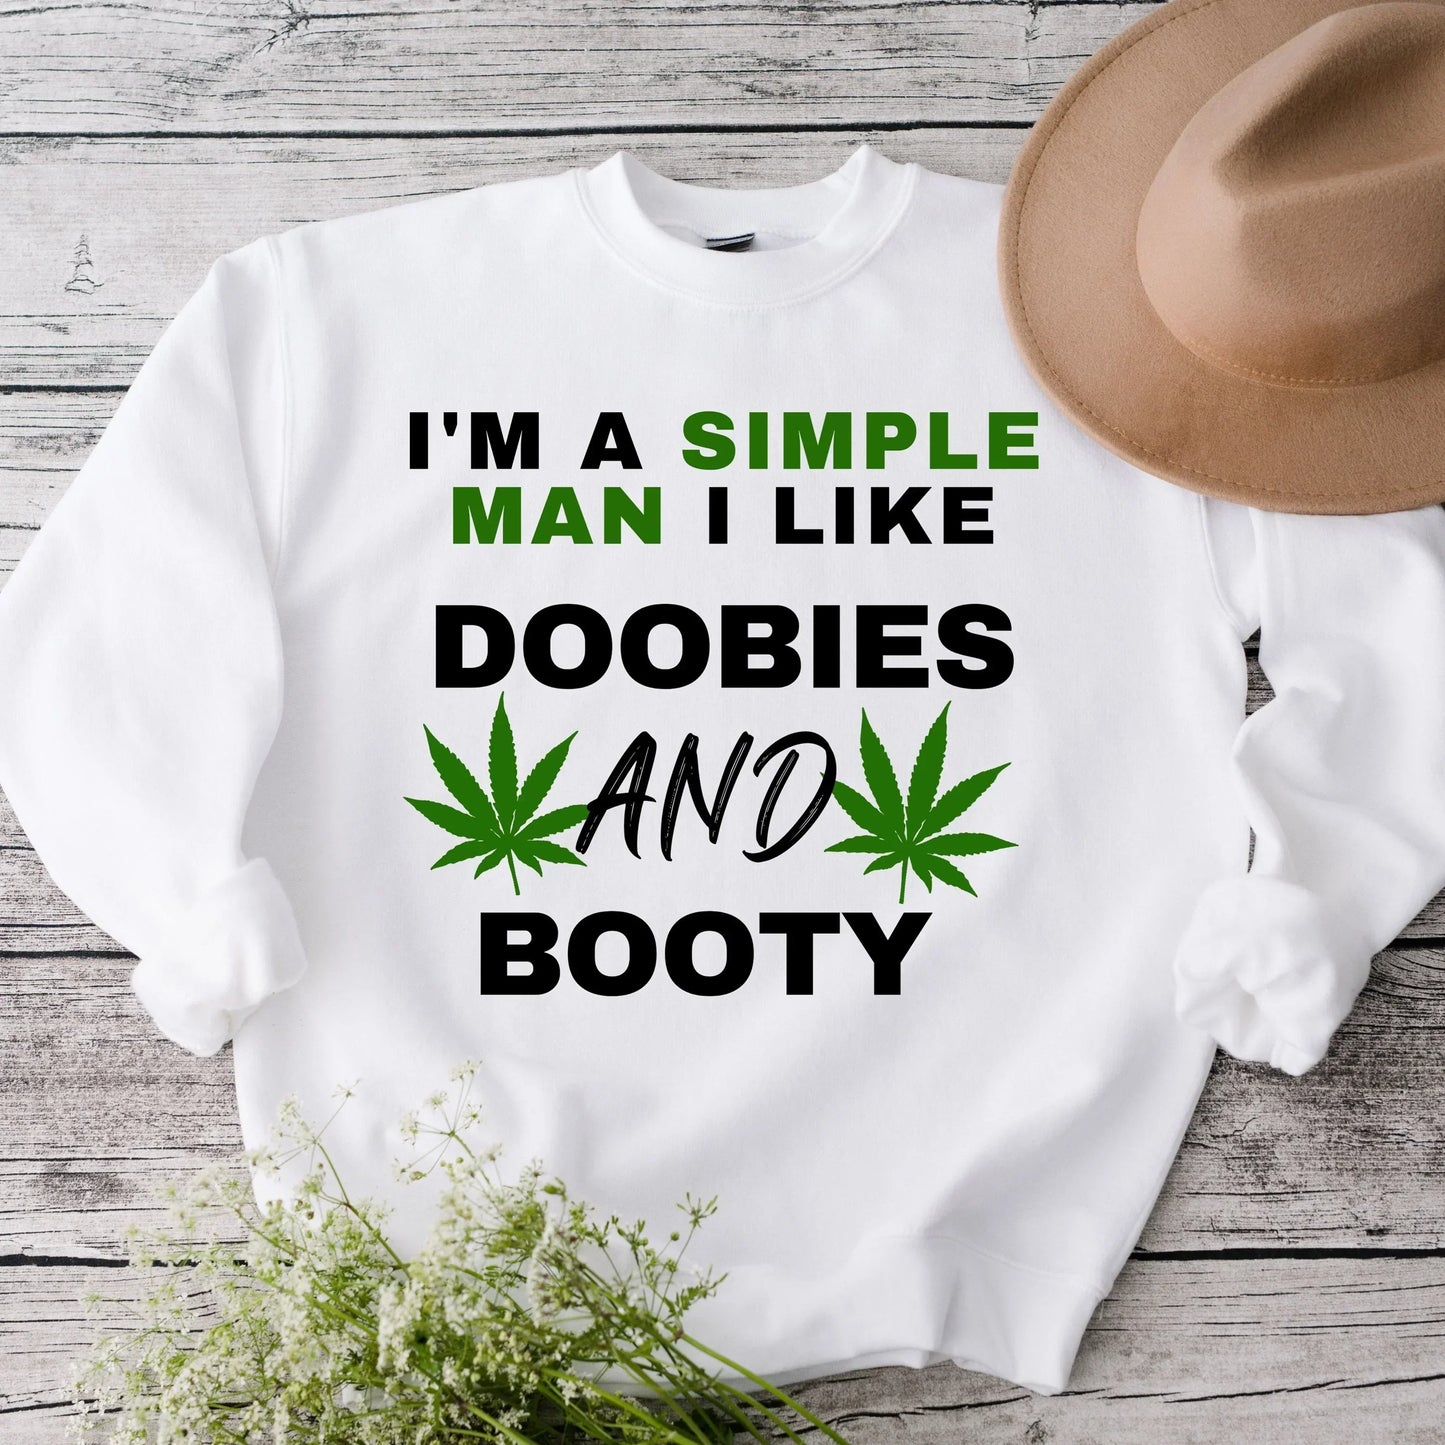 I'm a Simple Man, I Like Doobies and Booty, Funny Stoner Shirt